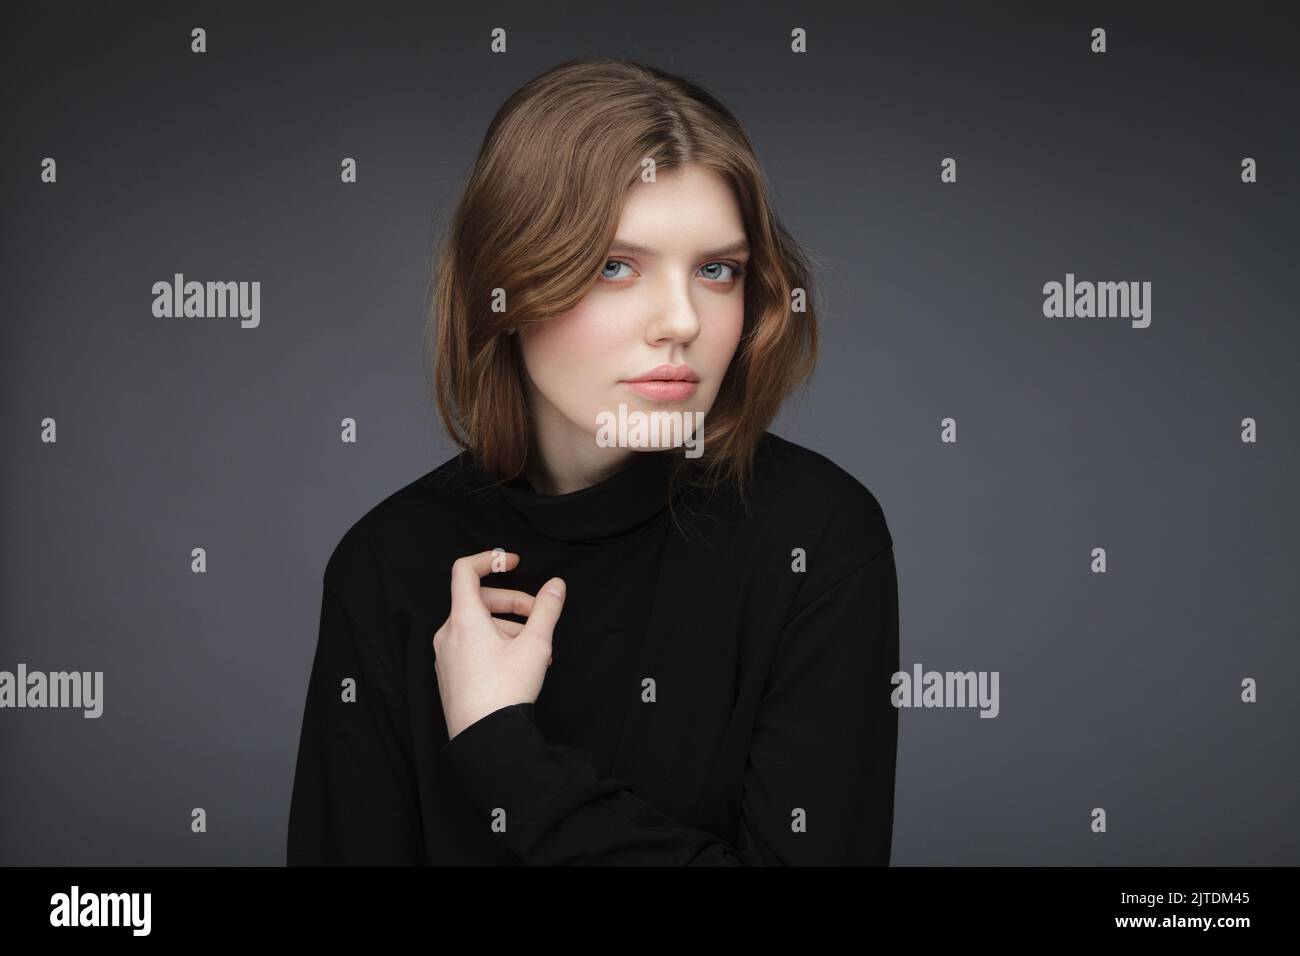 One young woman studio portrait wearing black turtleneck shirt. Image of young charming girl. Stock Photo